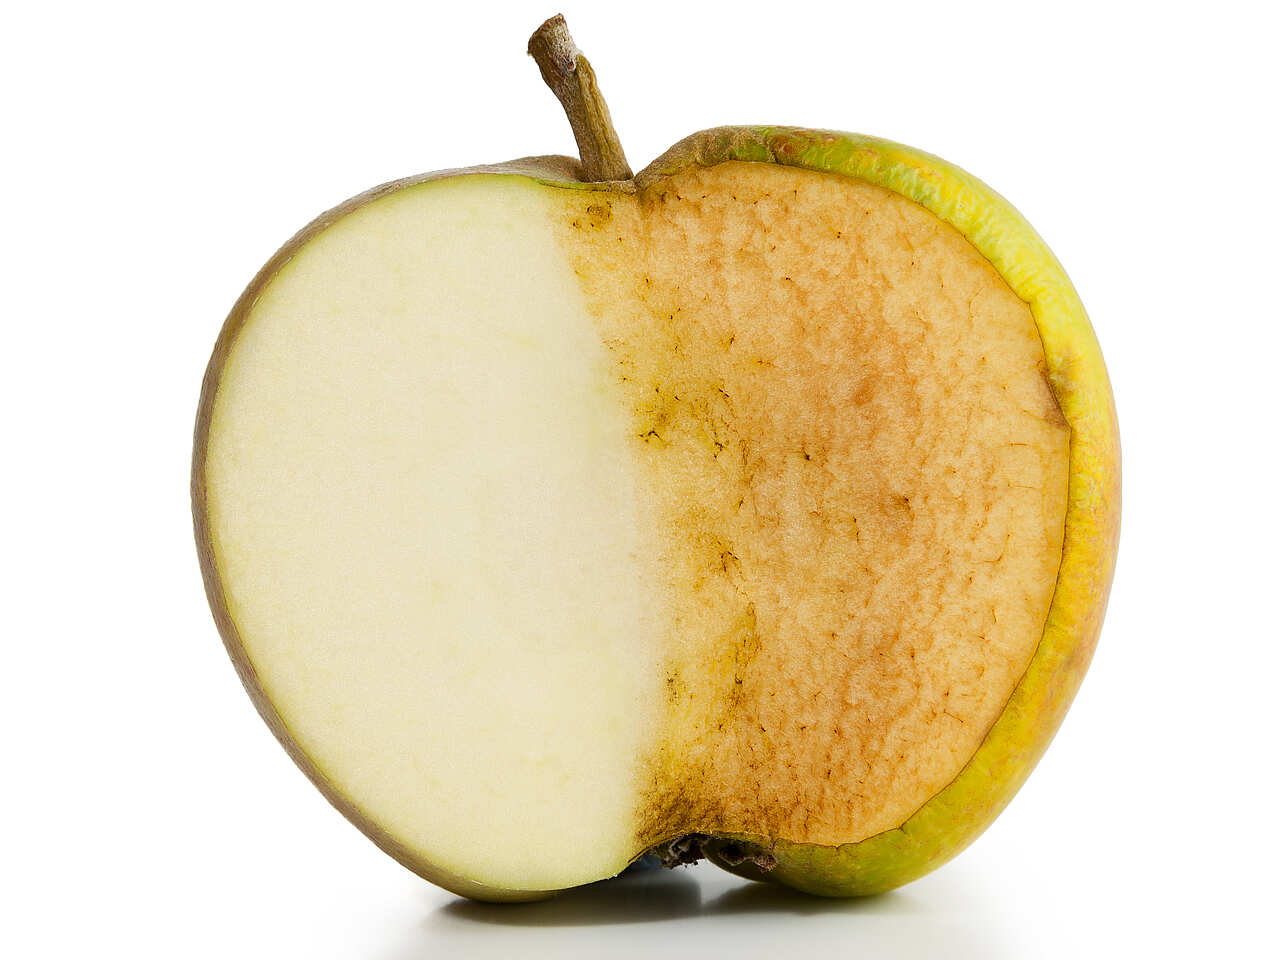 Apple treated with Food freshly vs. untreated